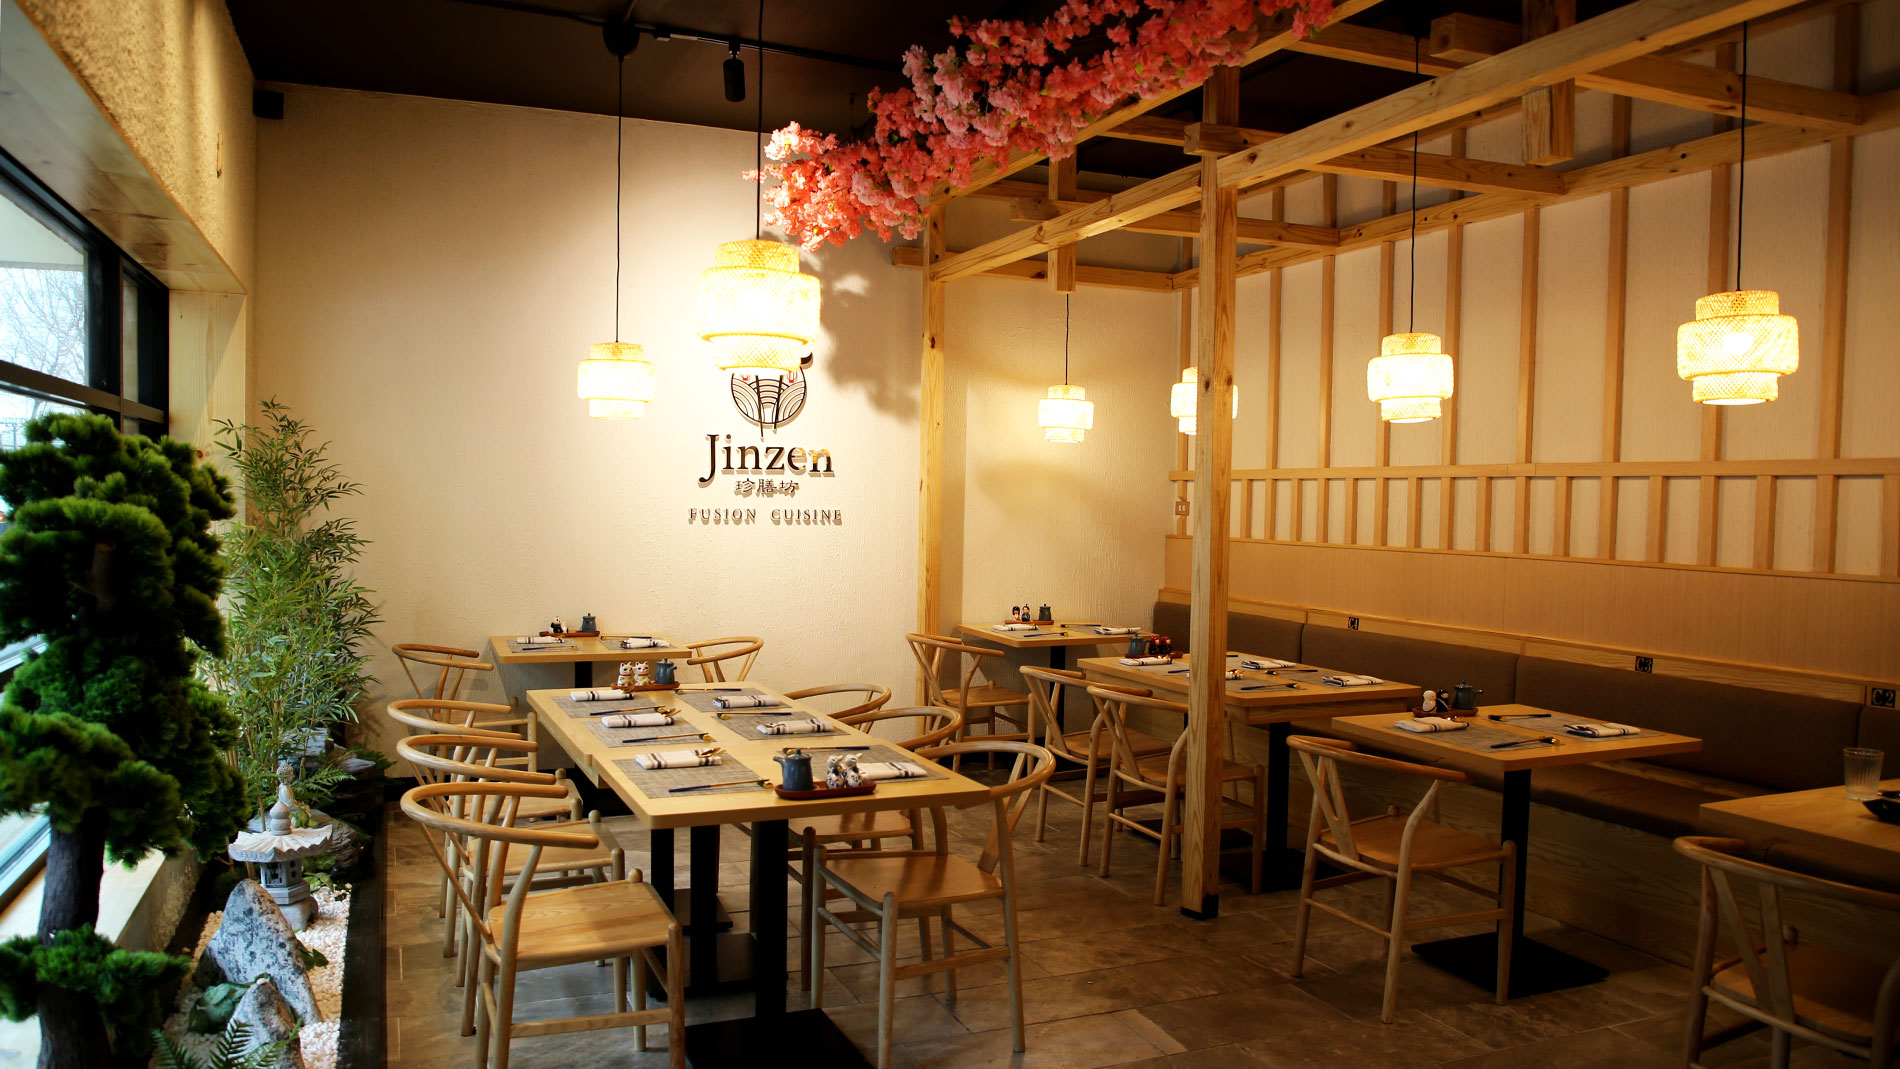 jinzen fusion cuisine in clayton, missouri